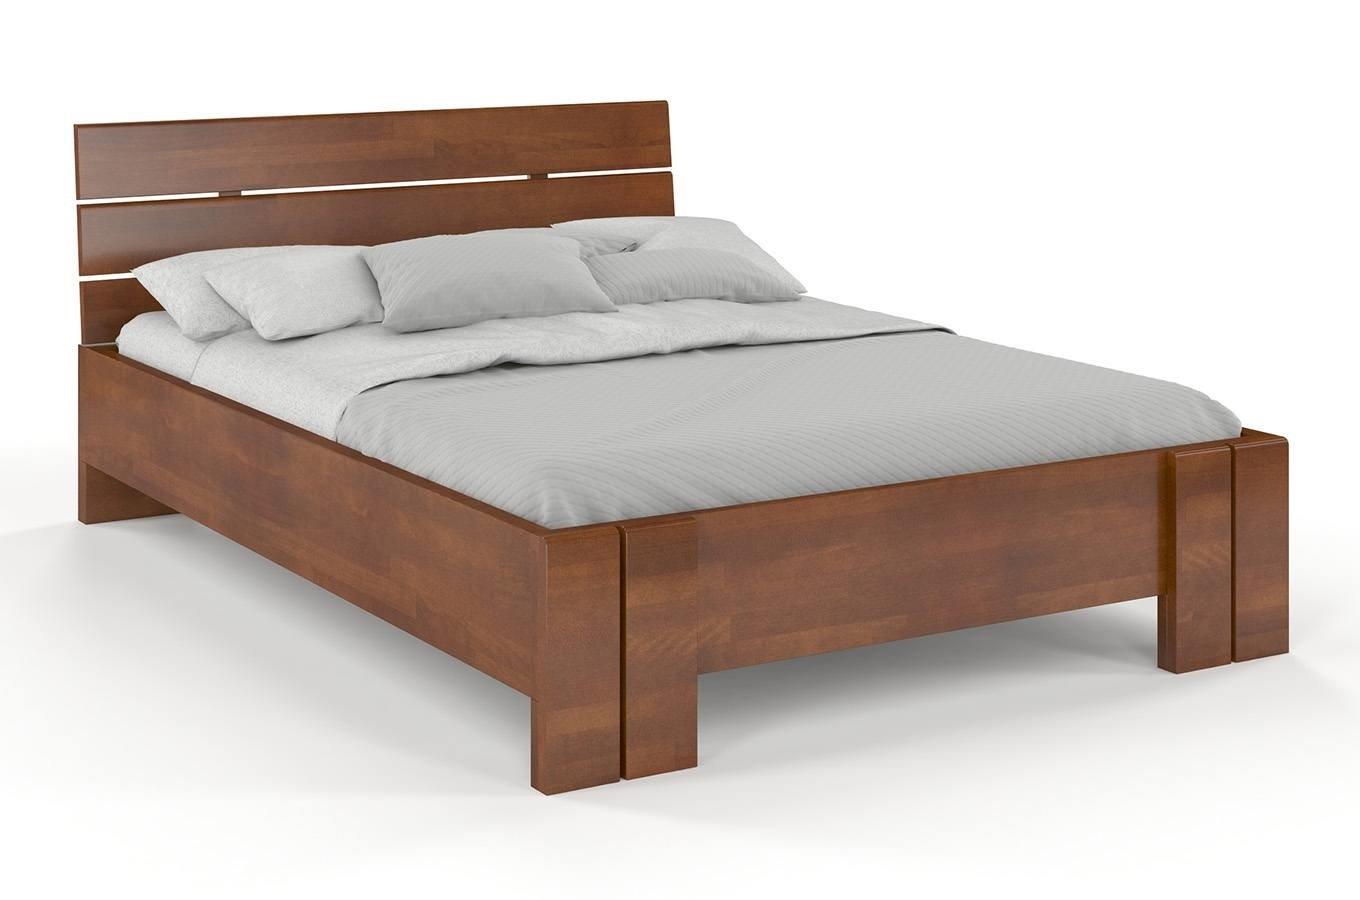 Łóżko drewniane bukowe Visby ARHUS High / 120x200 cm, kolor orzech